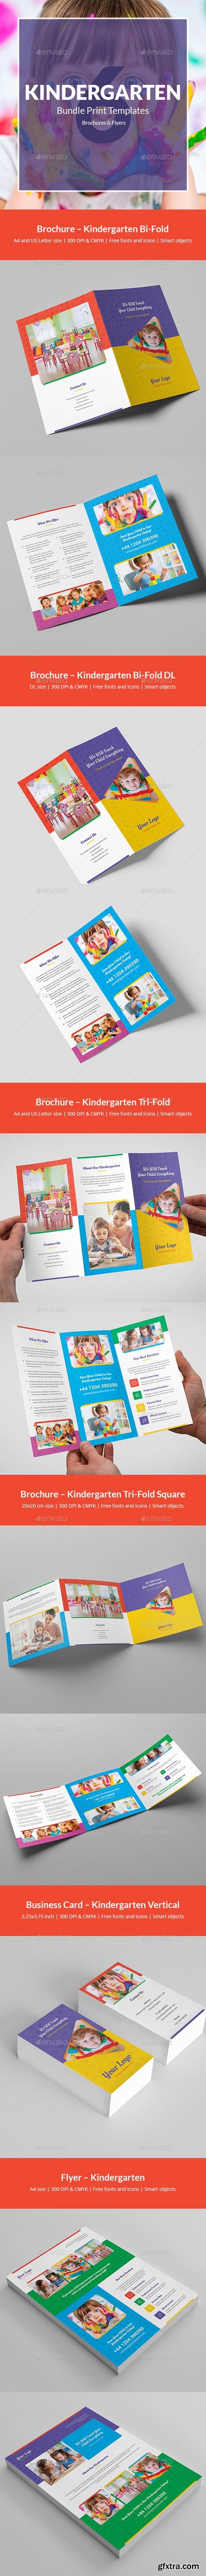 Graphicriver - Kindergarten – Bundle Print Templates 6 in 1 21220614